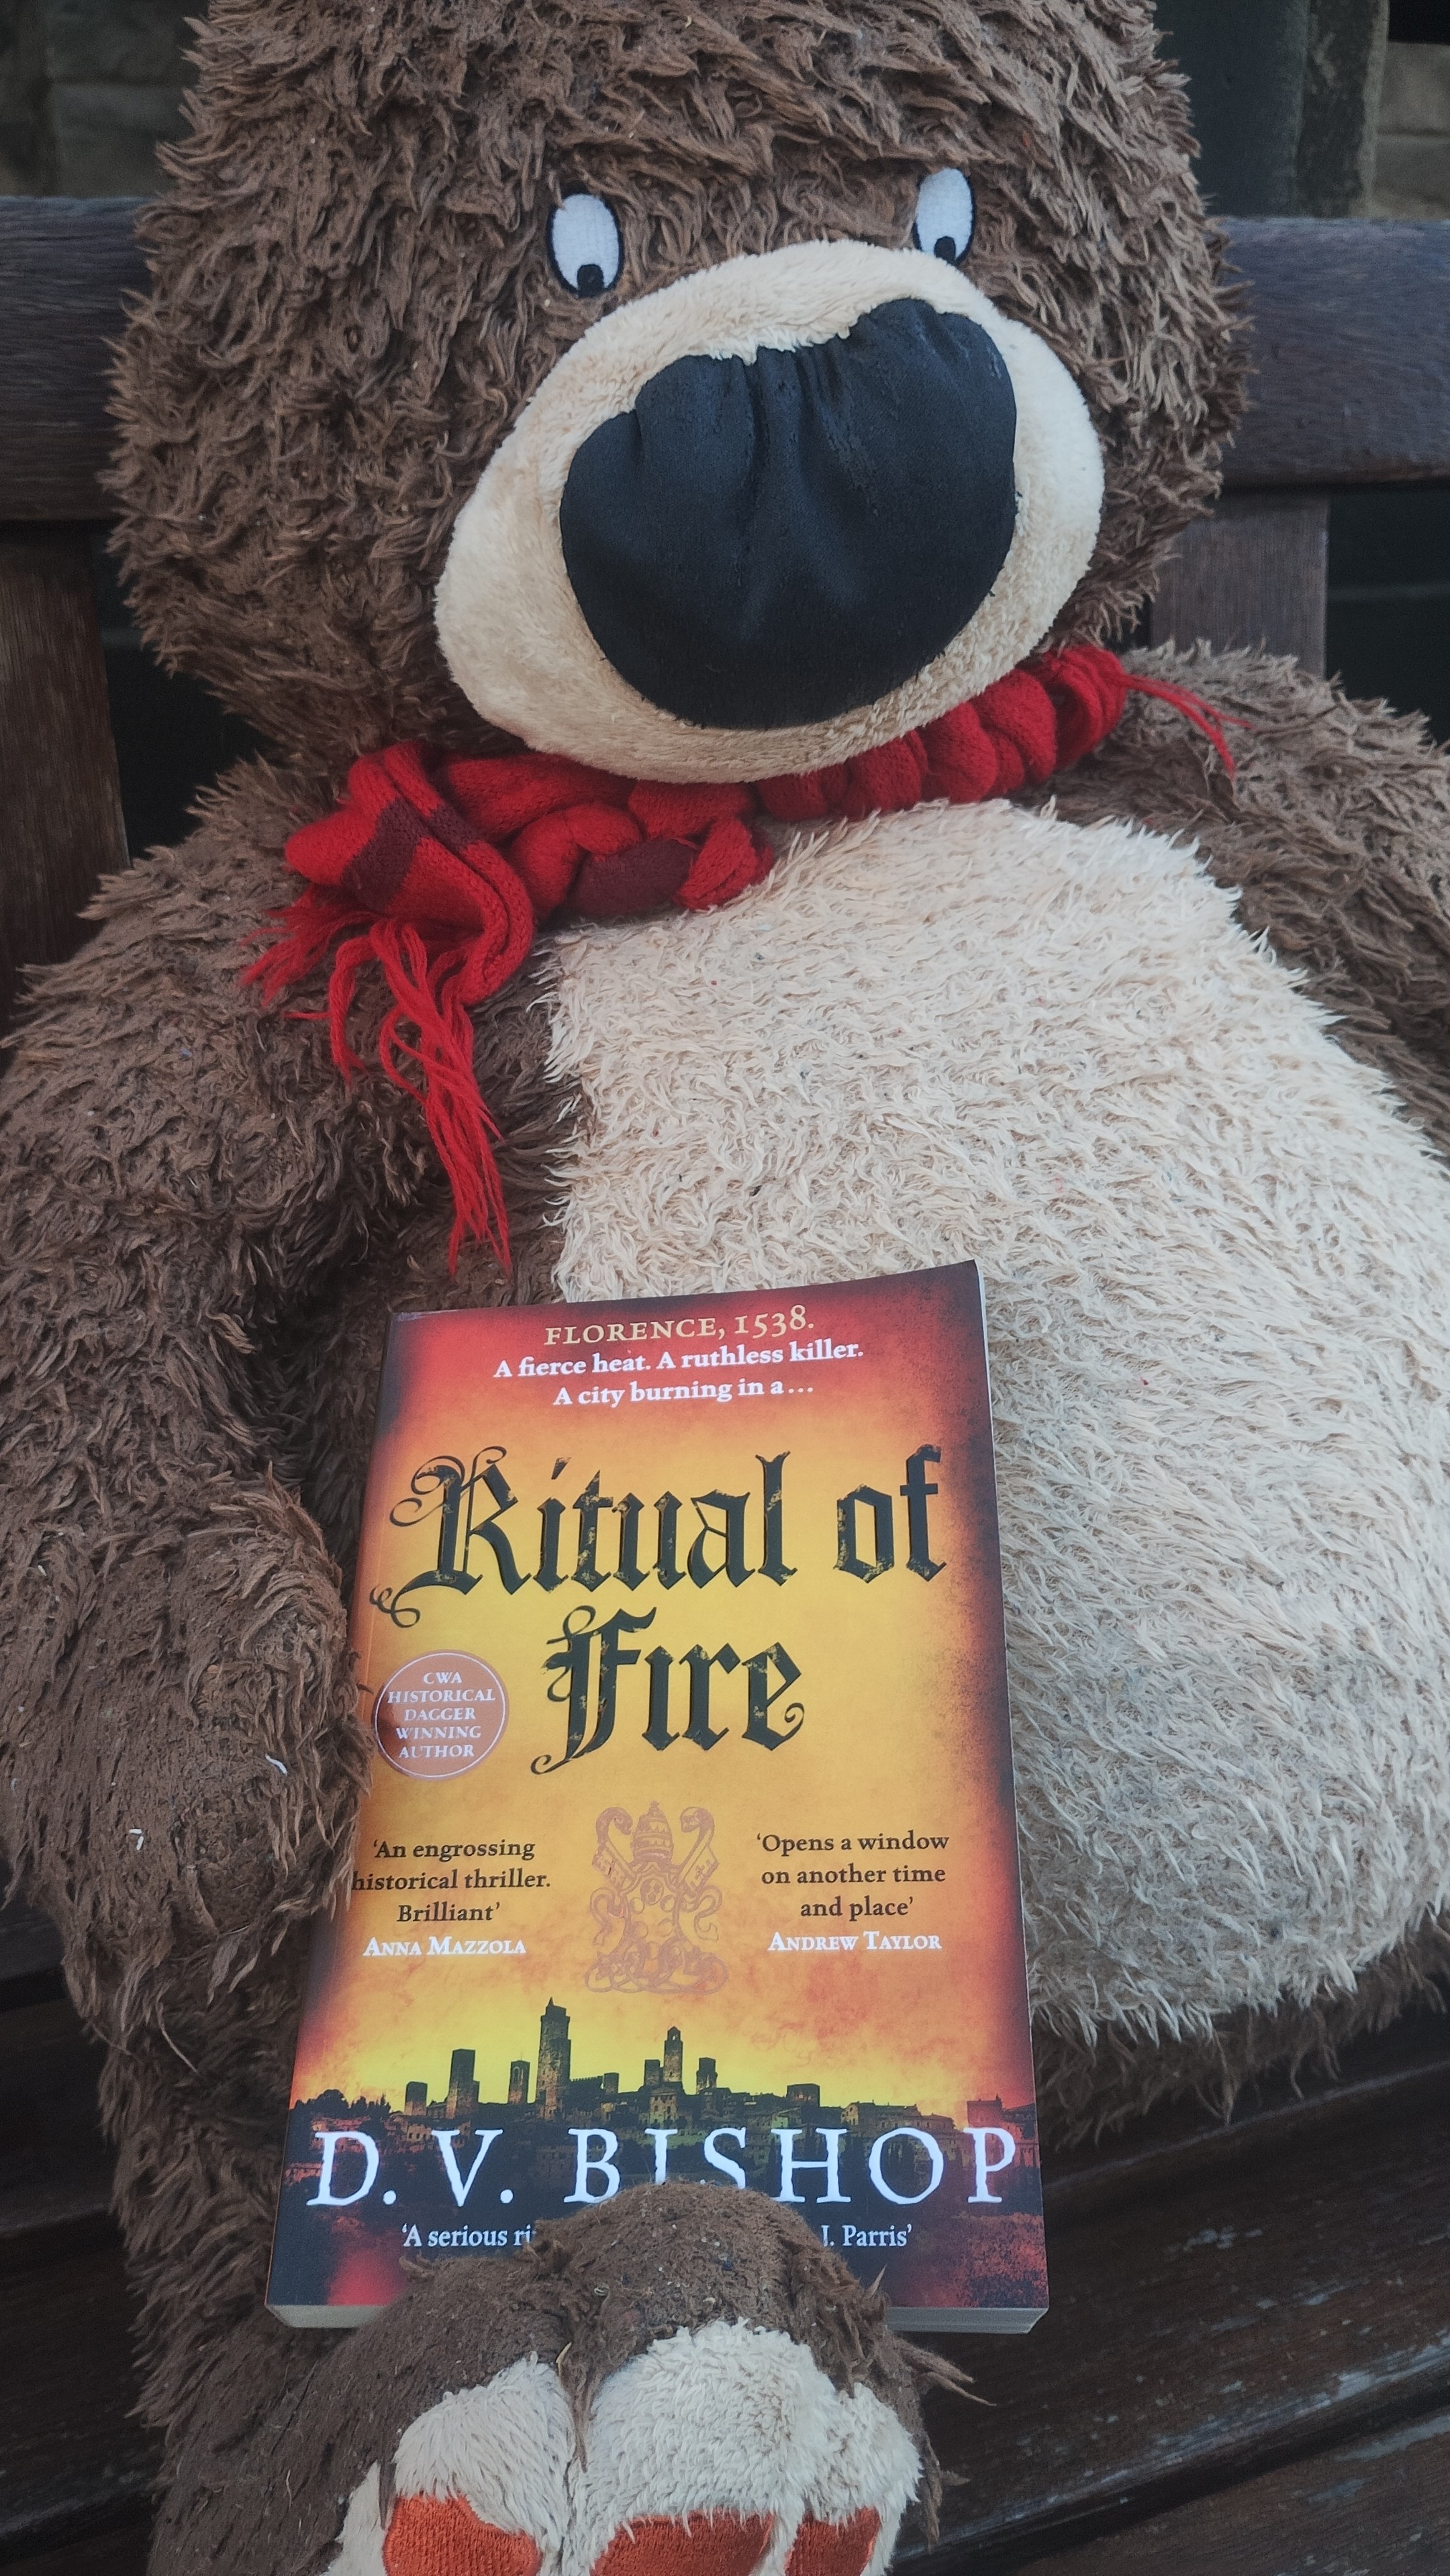 Hugless Douglass bear sitting on a park bench, holding a copy of D.V. Bishop's Ritual of Fire novel